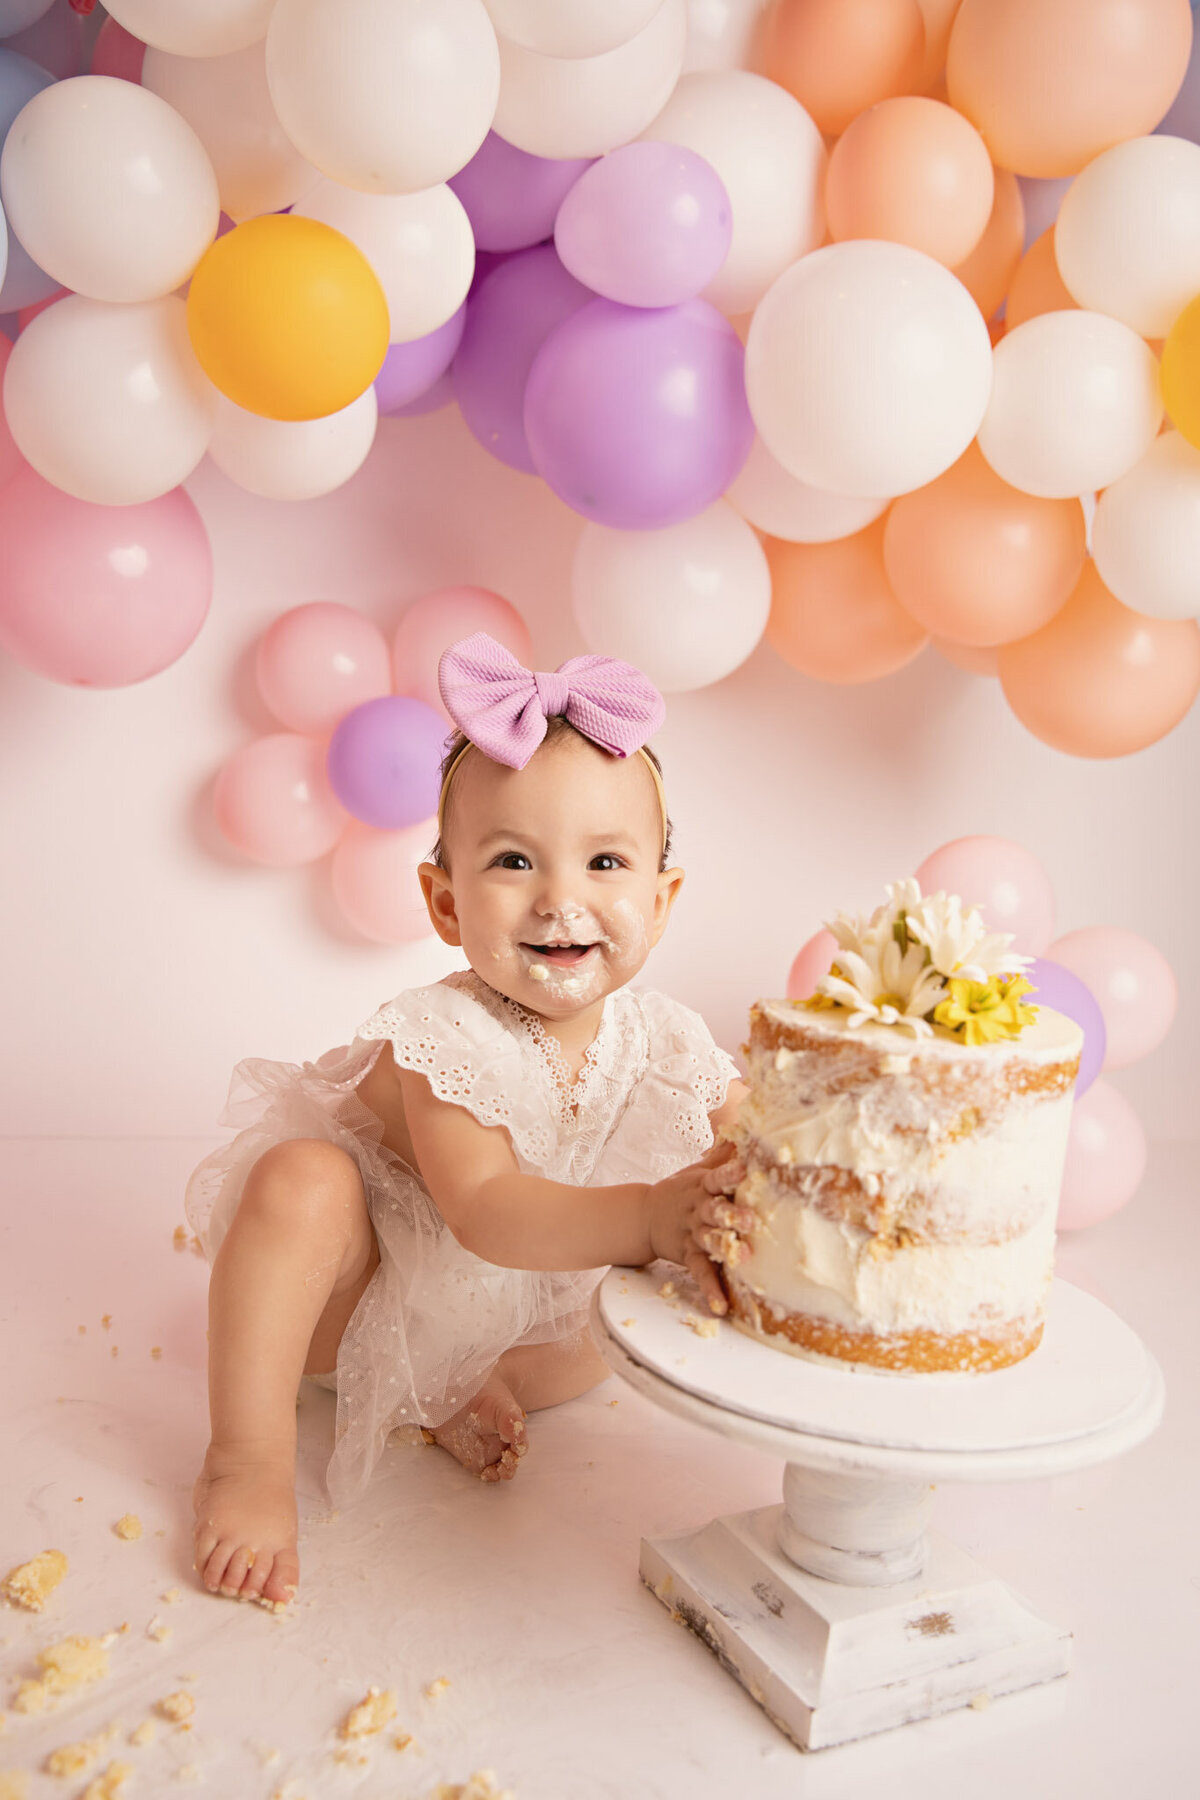 San Antonio baby first birthday photography cake smash photography studio lifestyle birthday photographer luxury photo studio